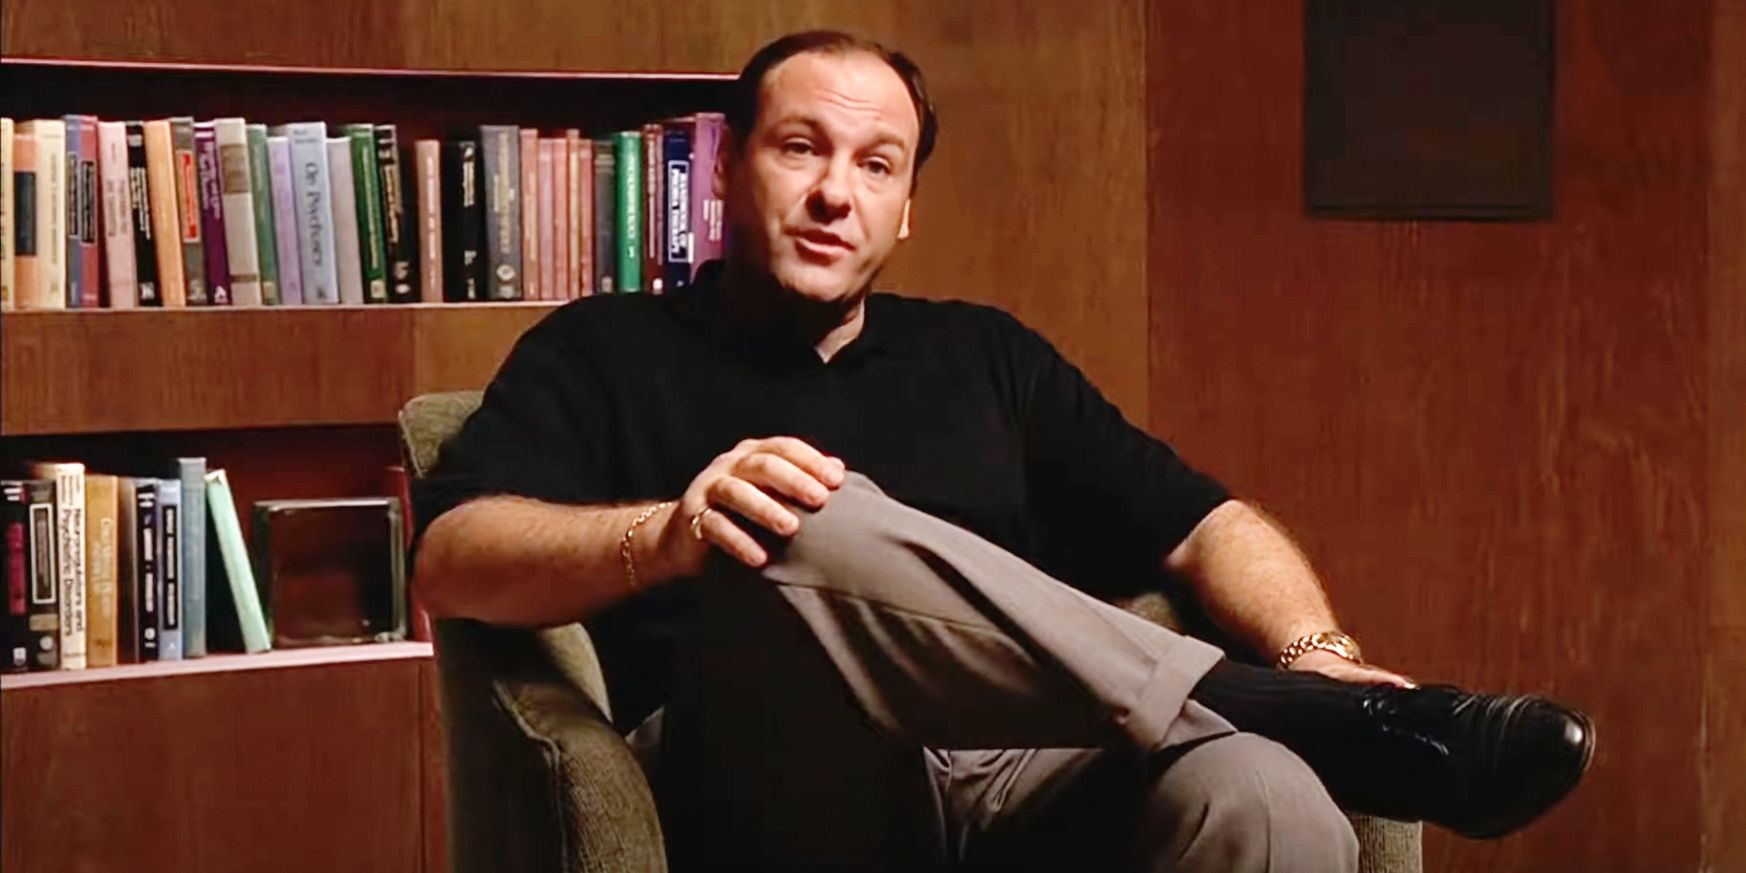 Tony Soprano, played by James Gandolfini, sat in his therapist's office in the trailer for HBO's The Sopranos.